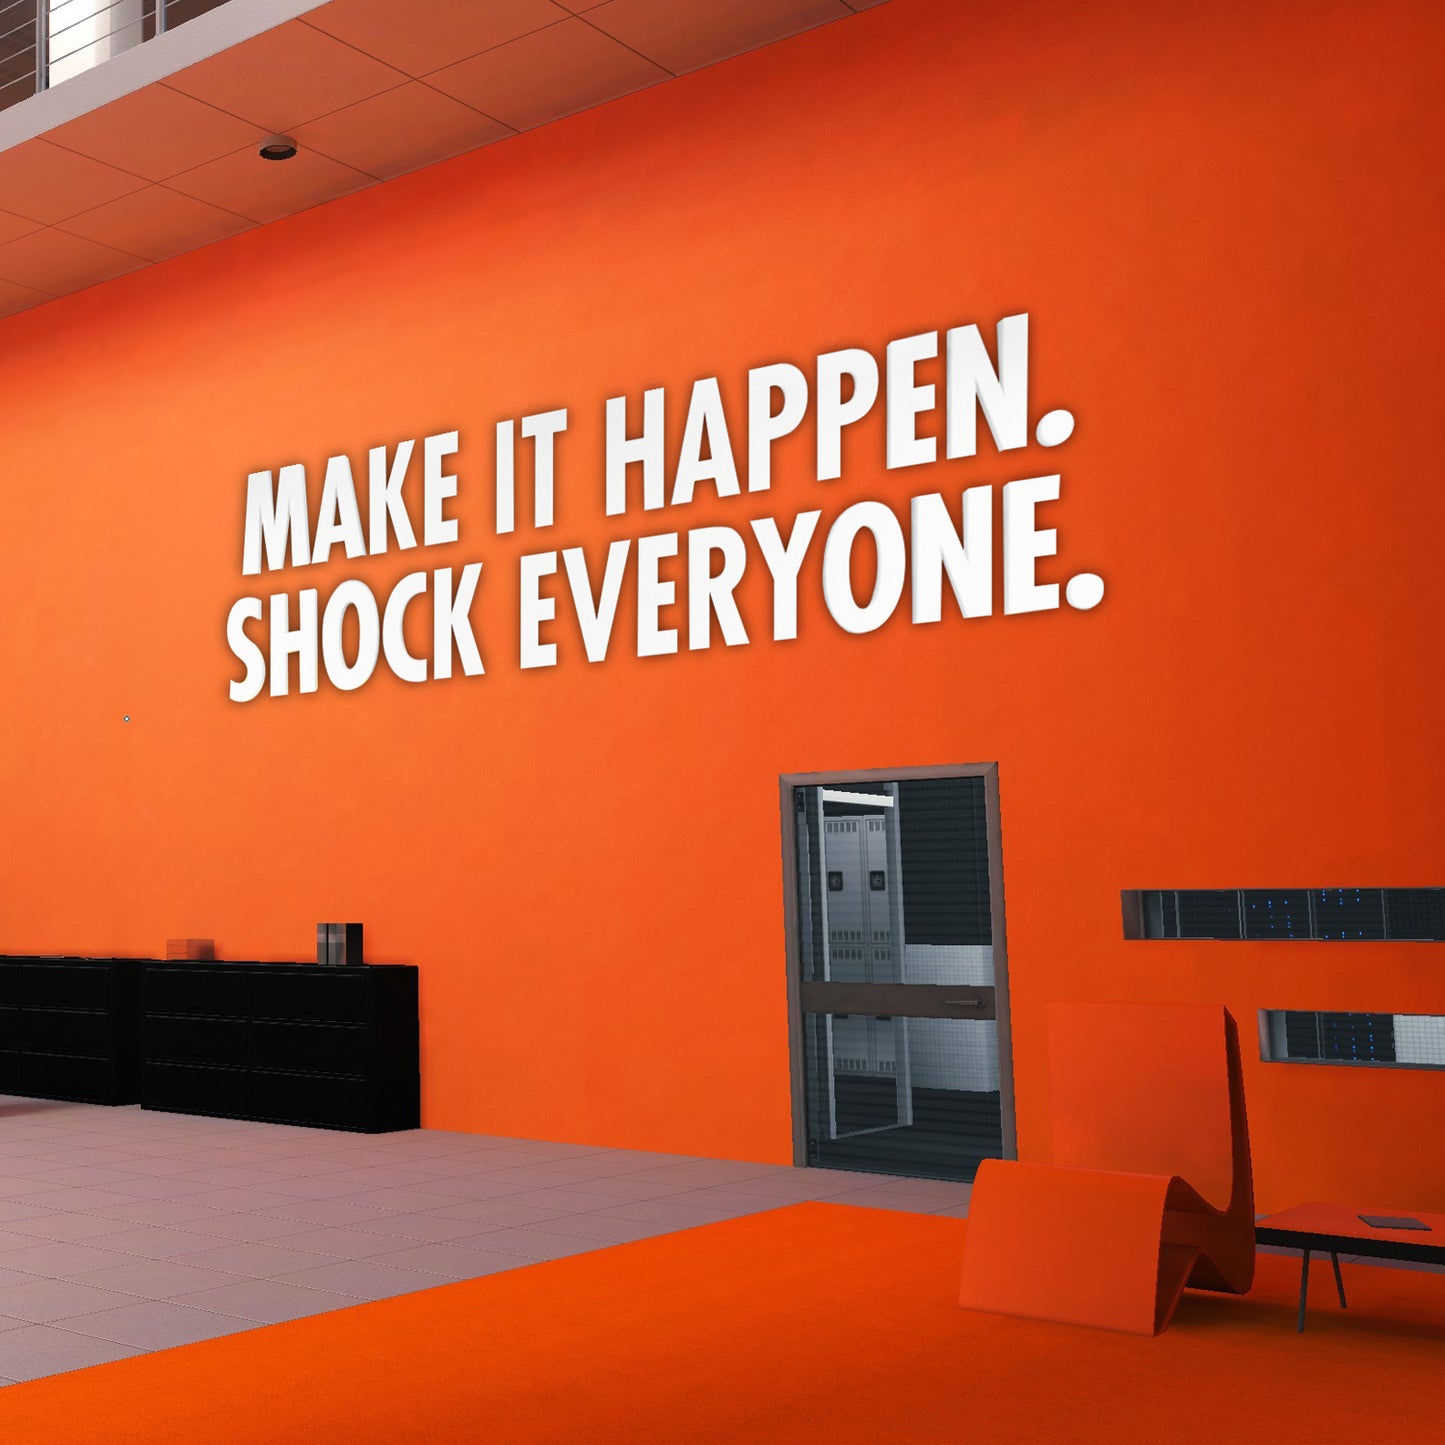 Make It Happen, Shock Everyone 3D Acrylic Wall Sign